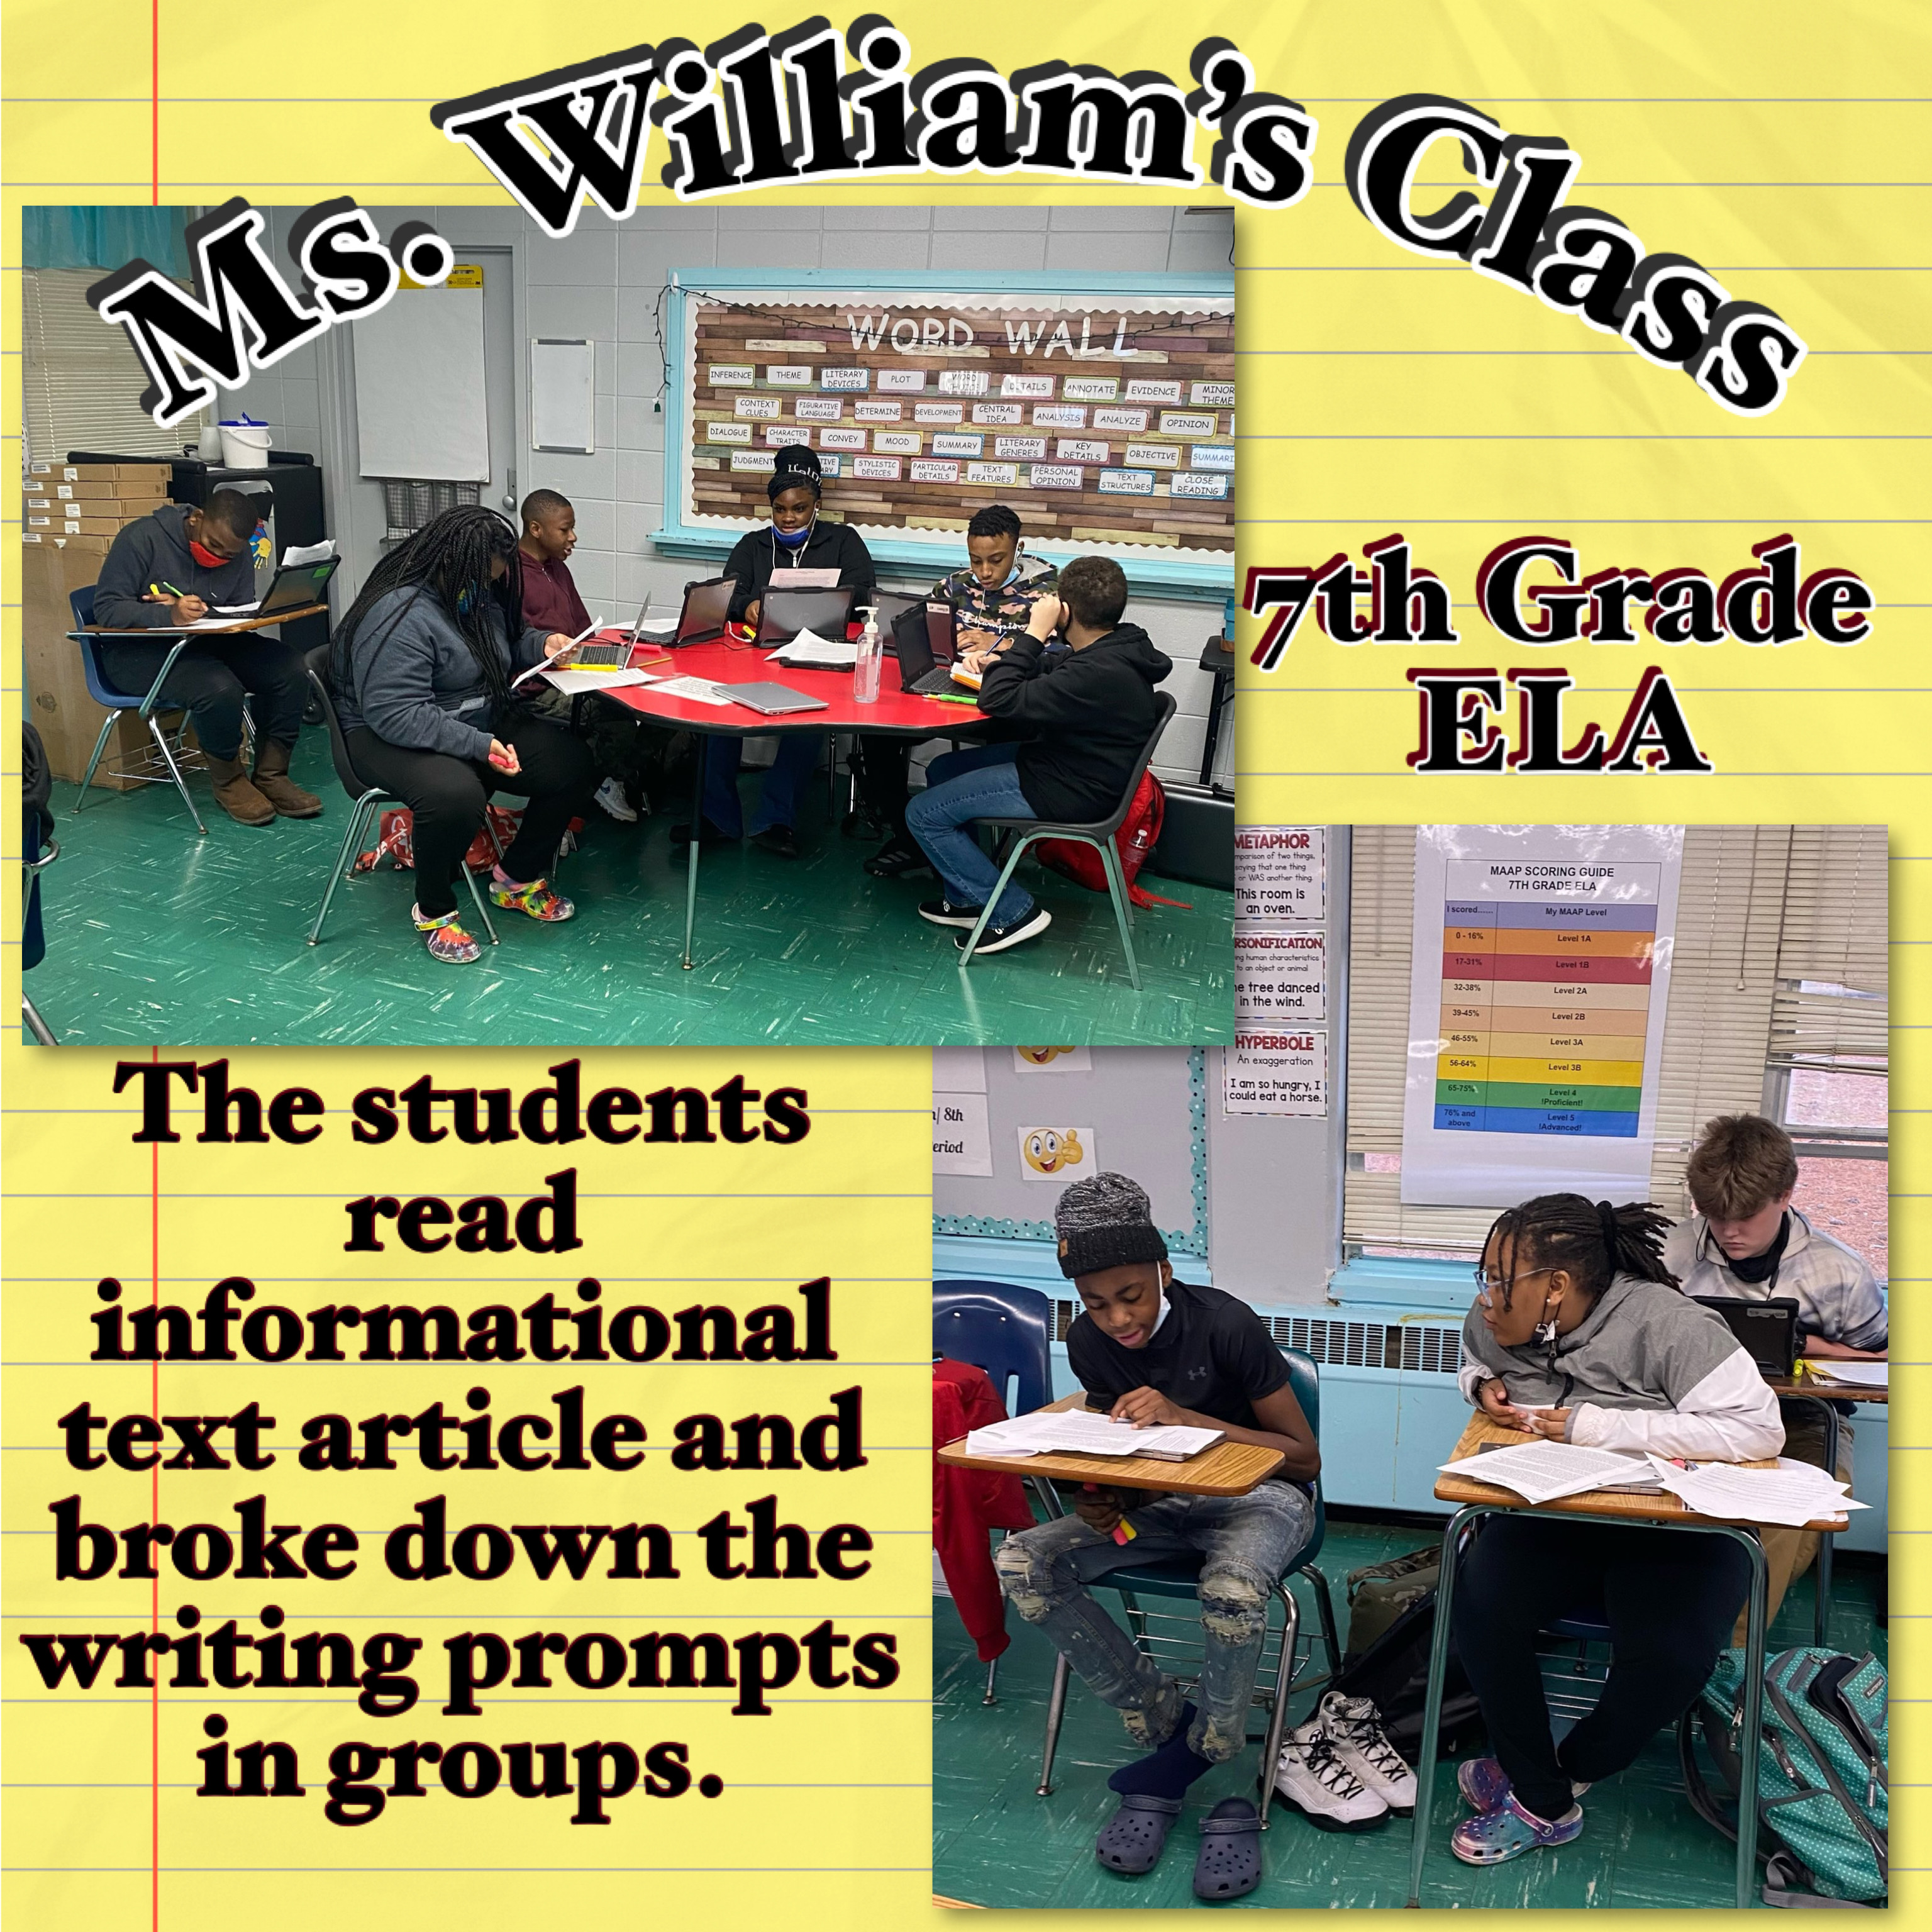 Williams Class